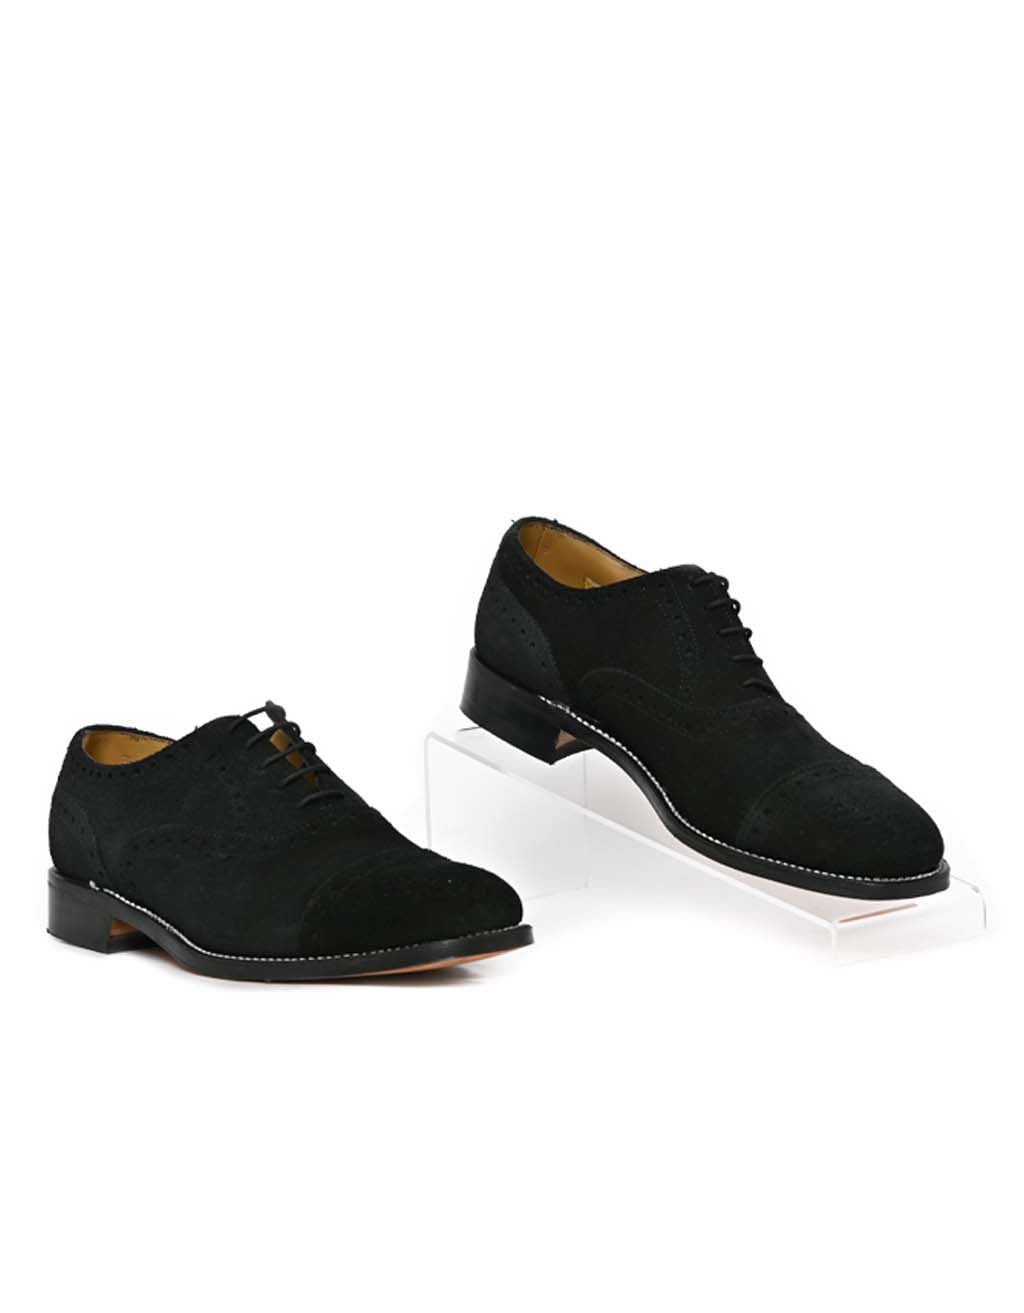 Mens Crockett & Jones, Rowan, Formal Black Lace Up – Bolton Shoes